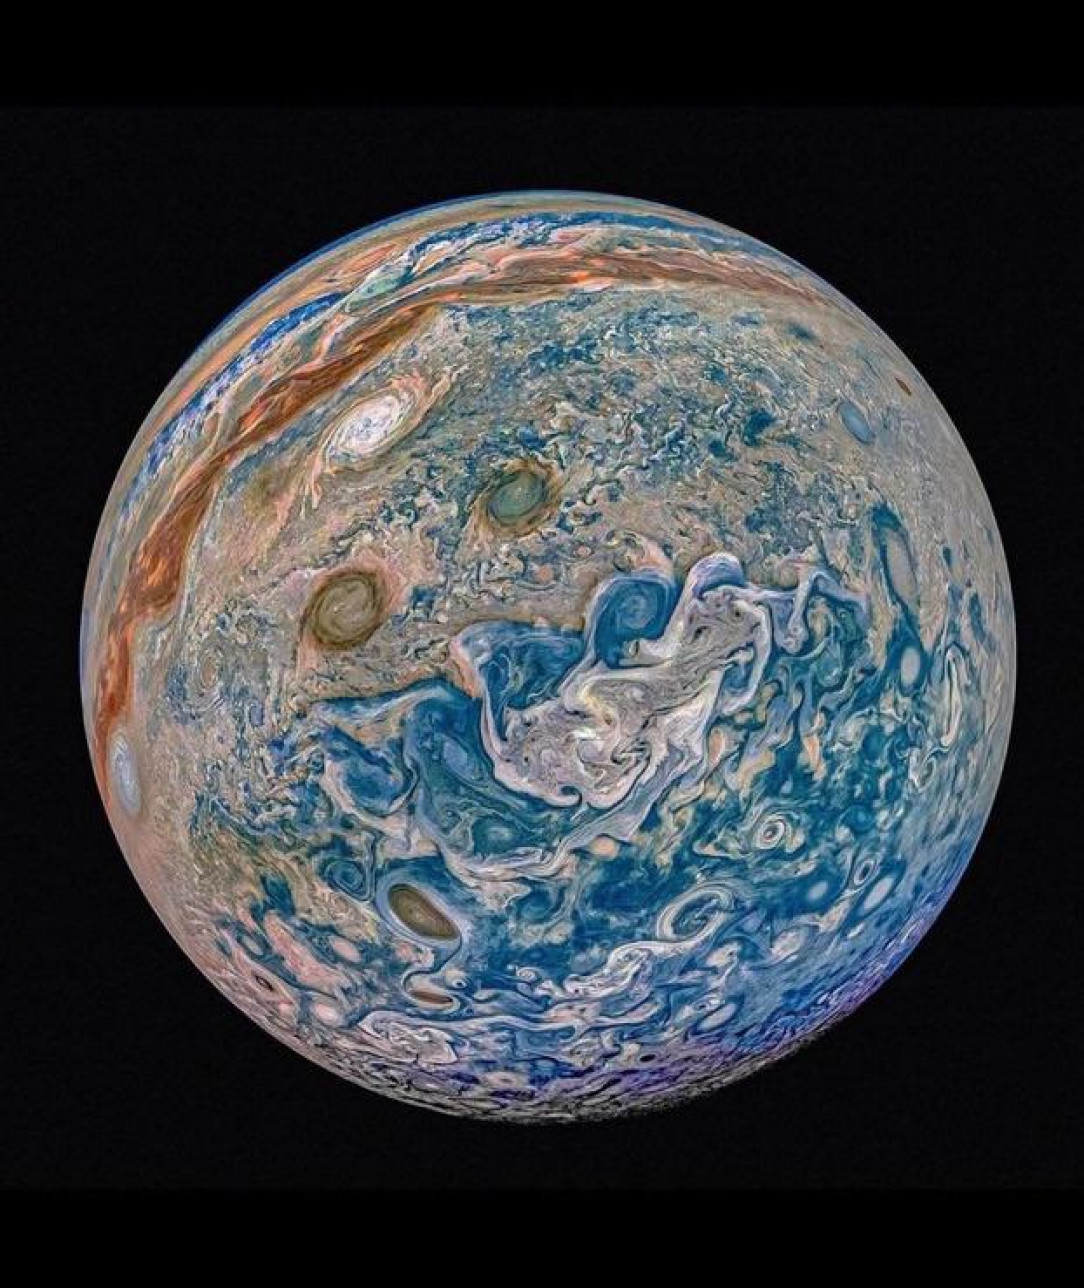 Clearest ever photo of Jupiter